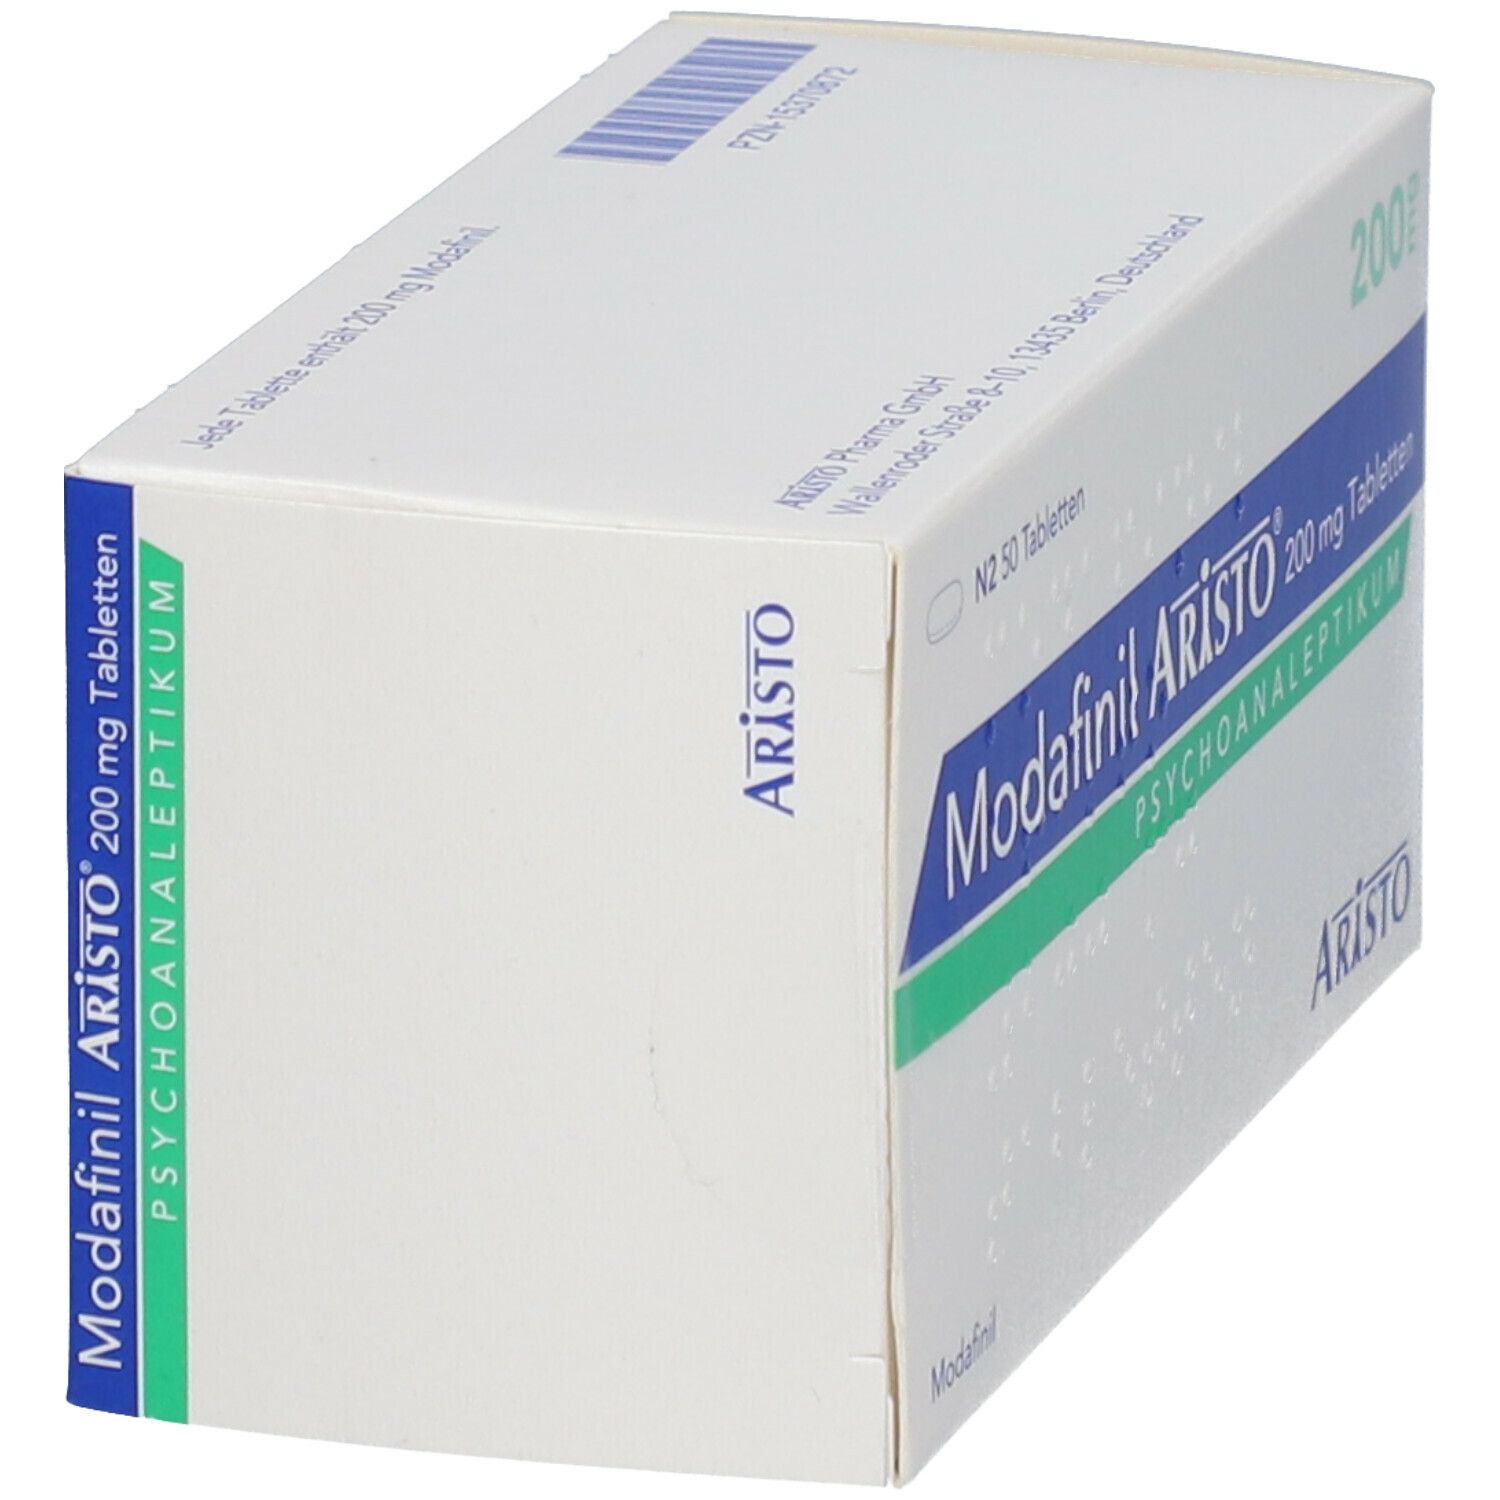 Modafinil Aristo® 200 mg